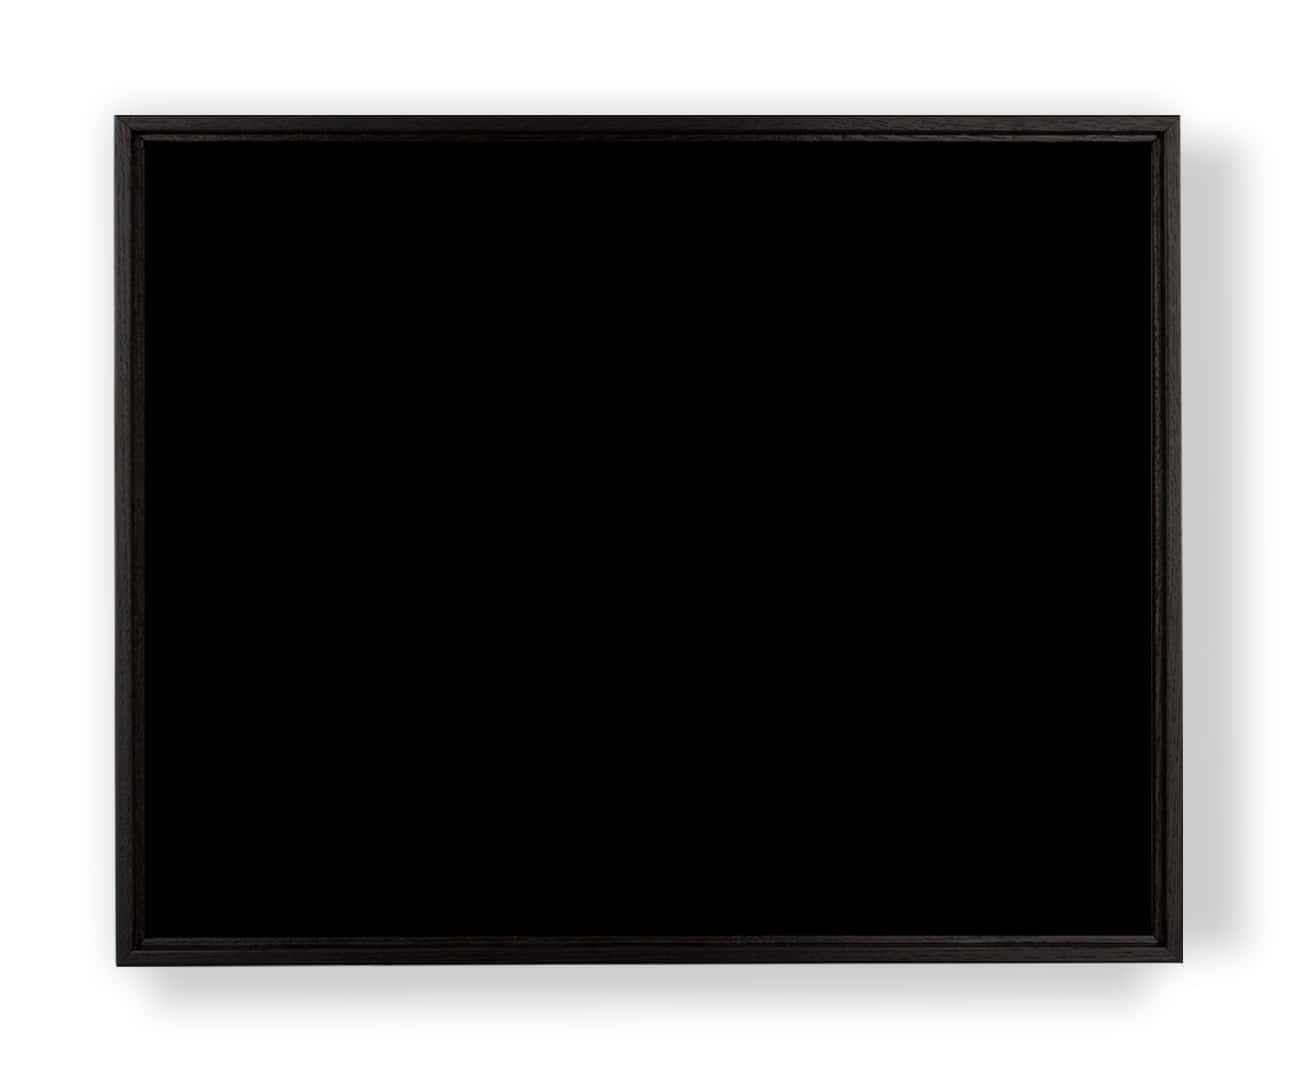 A Black Rectangular Frame With A Black Border